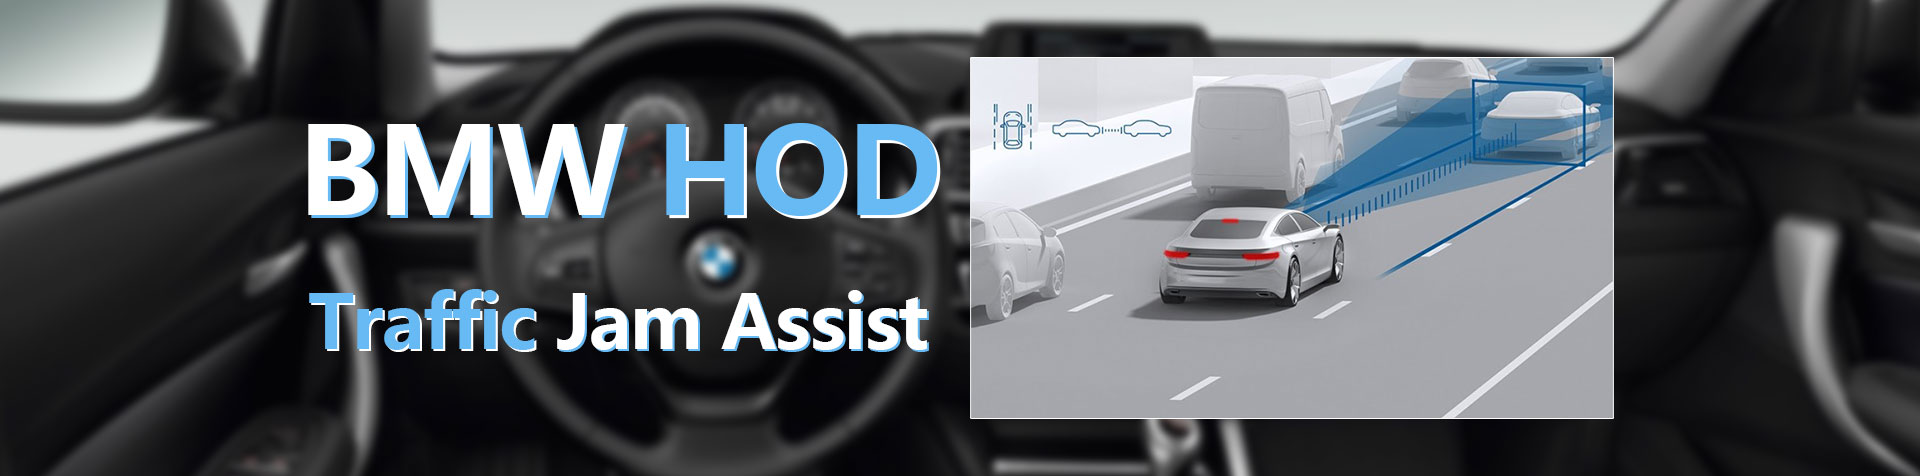 BMW HOD Emulator - Traffic Jam Assist(TJA)